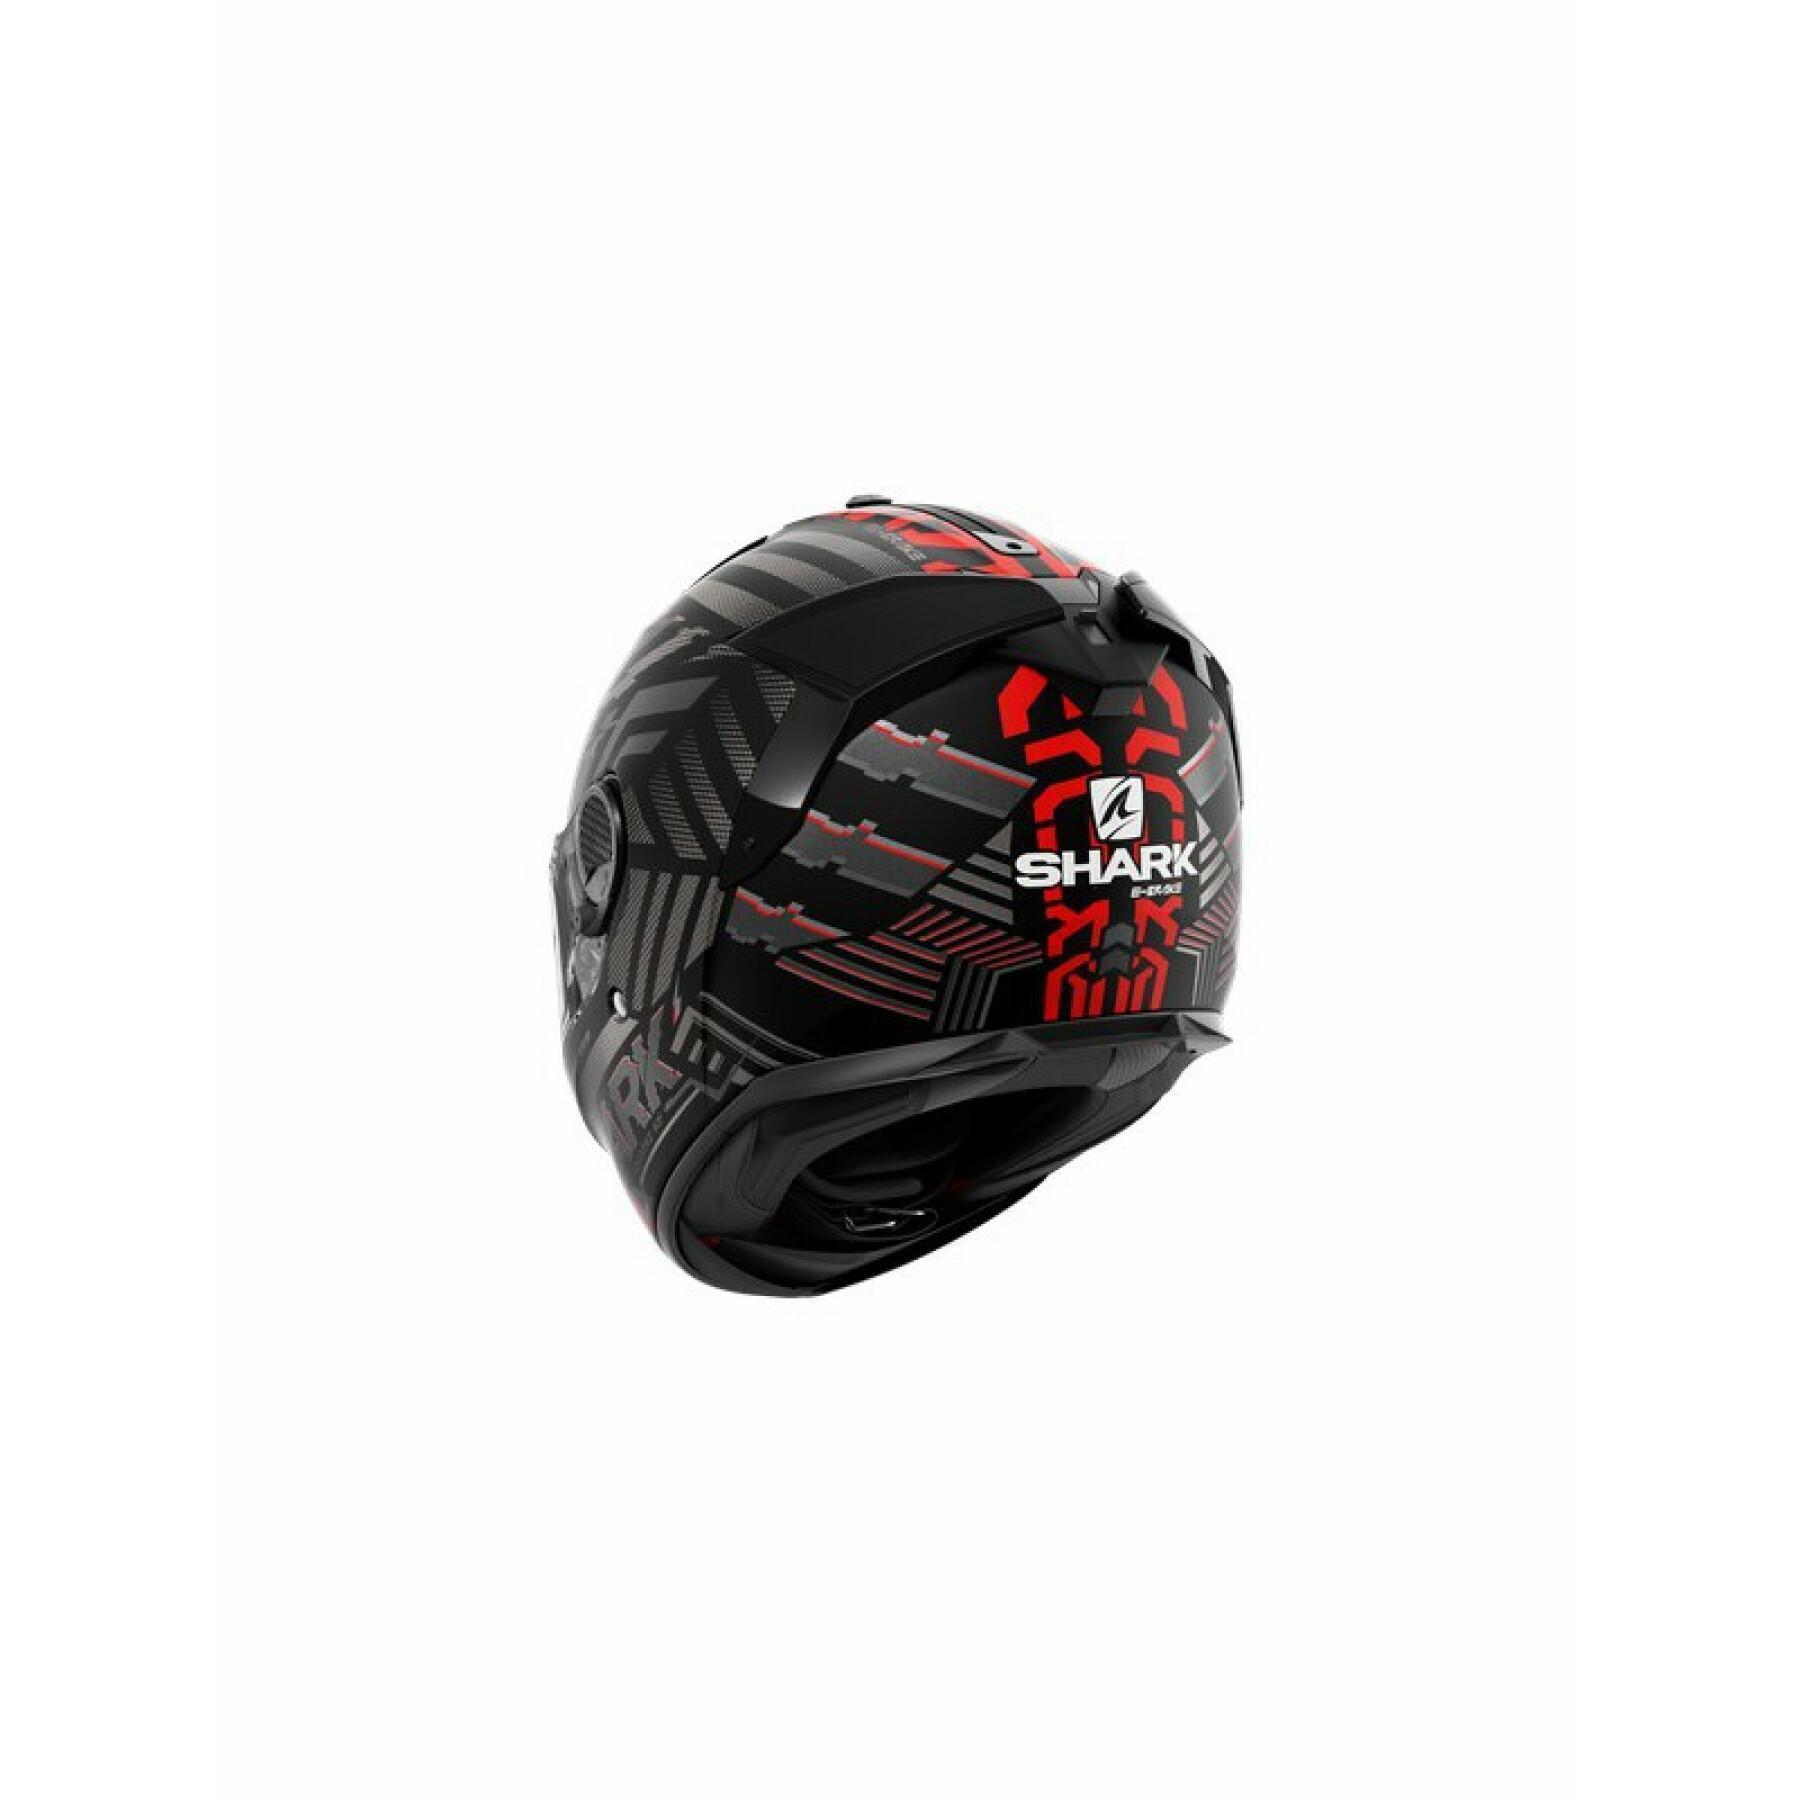 Full face motorcycle helmet Shark spartan GT bcl. micr. e-brake